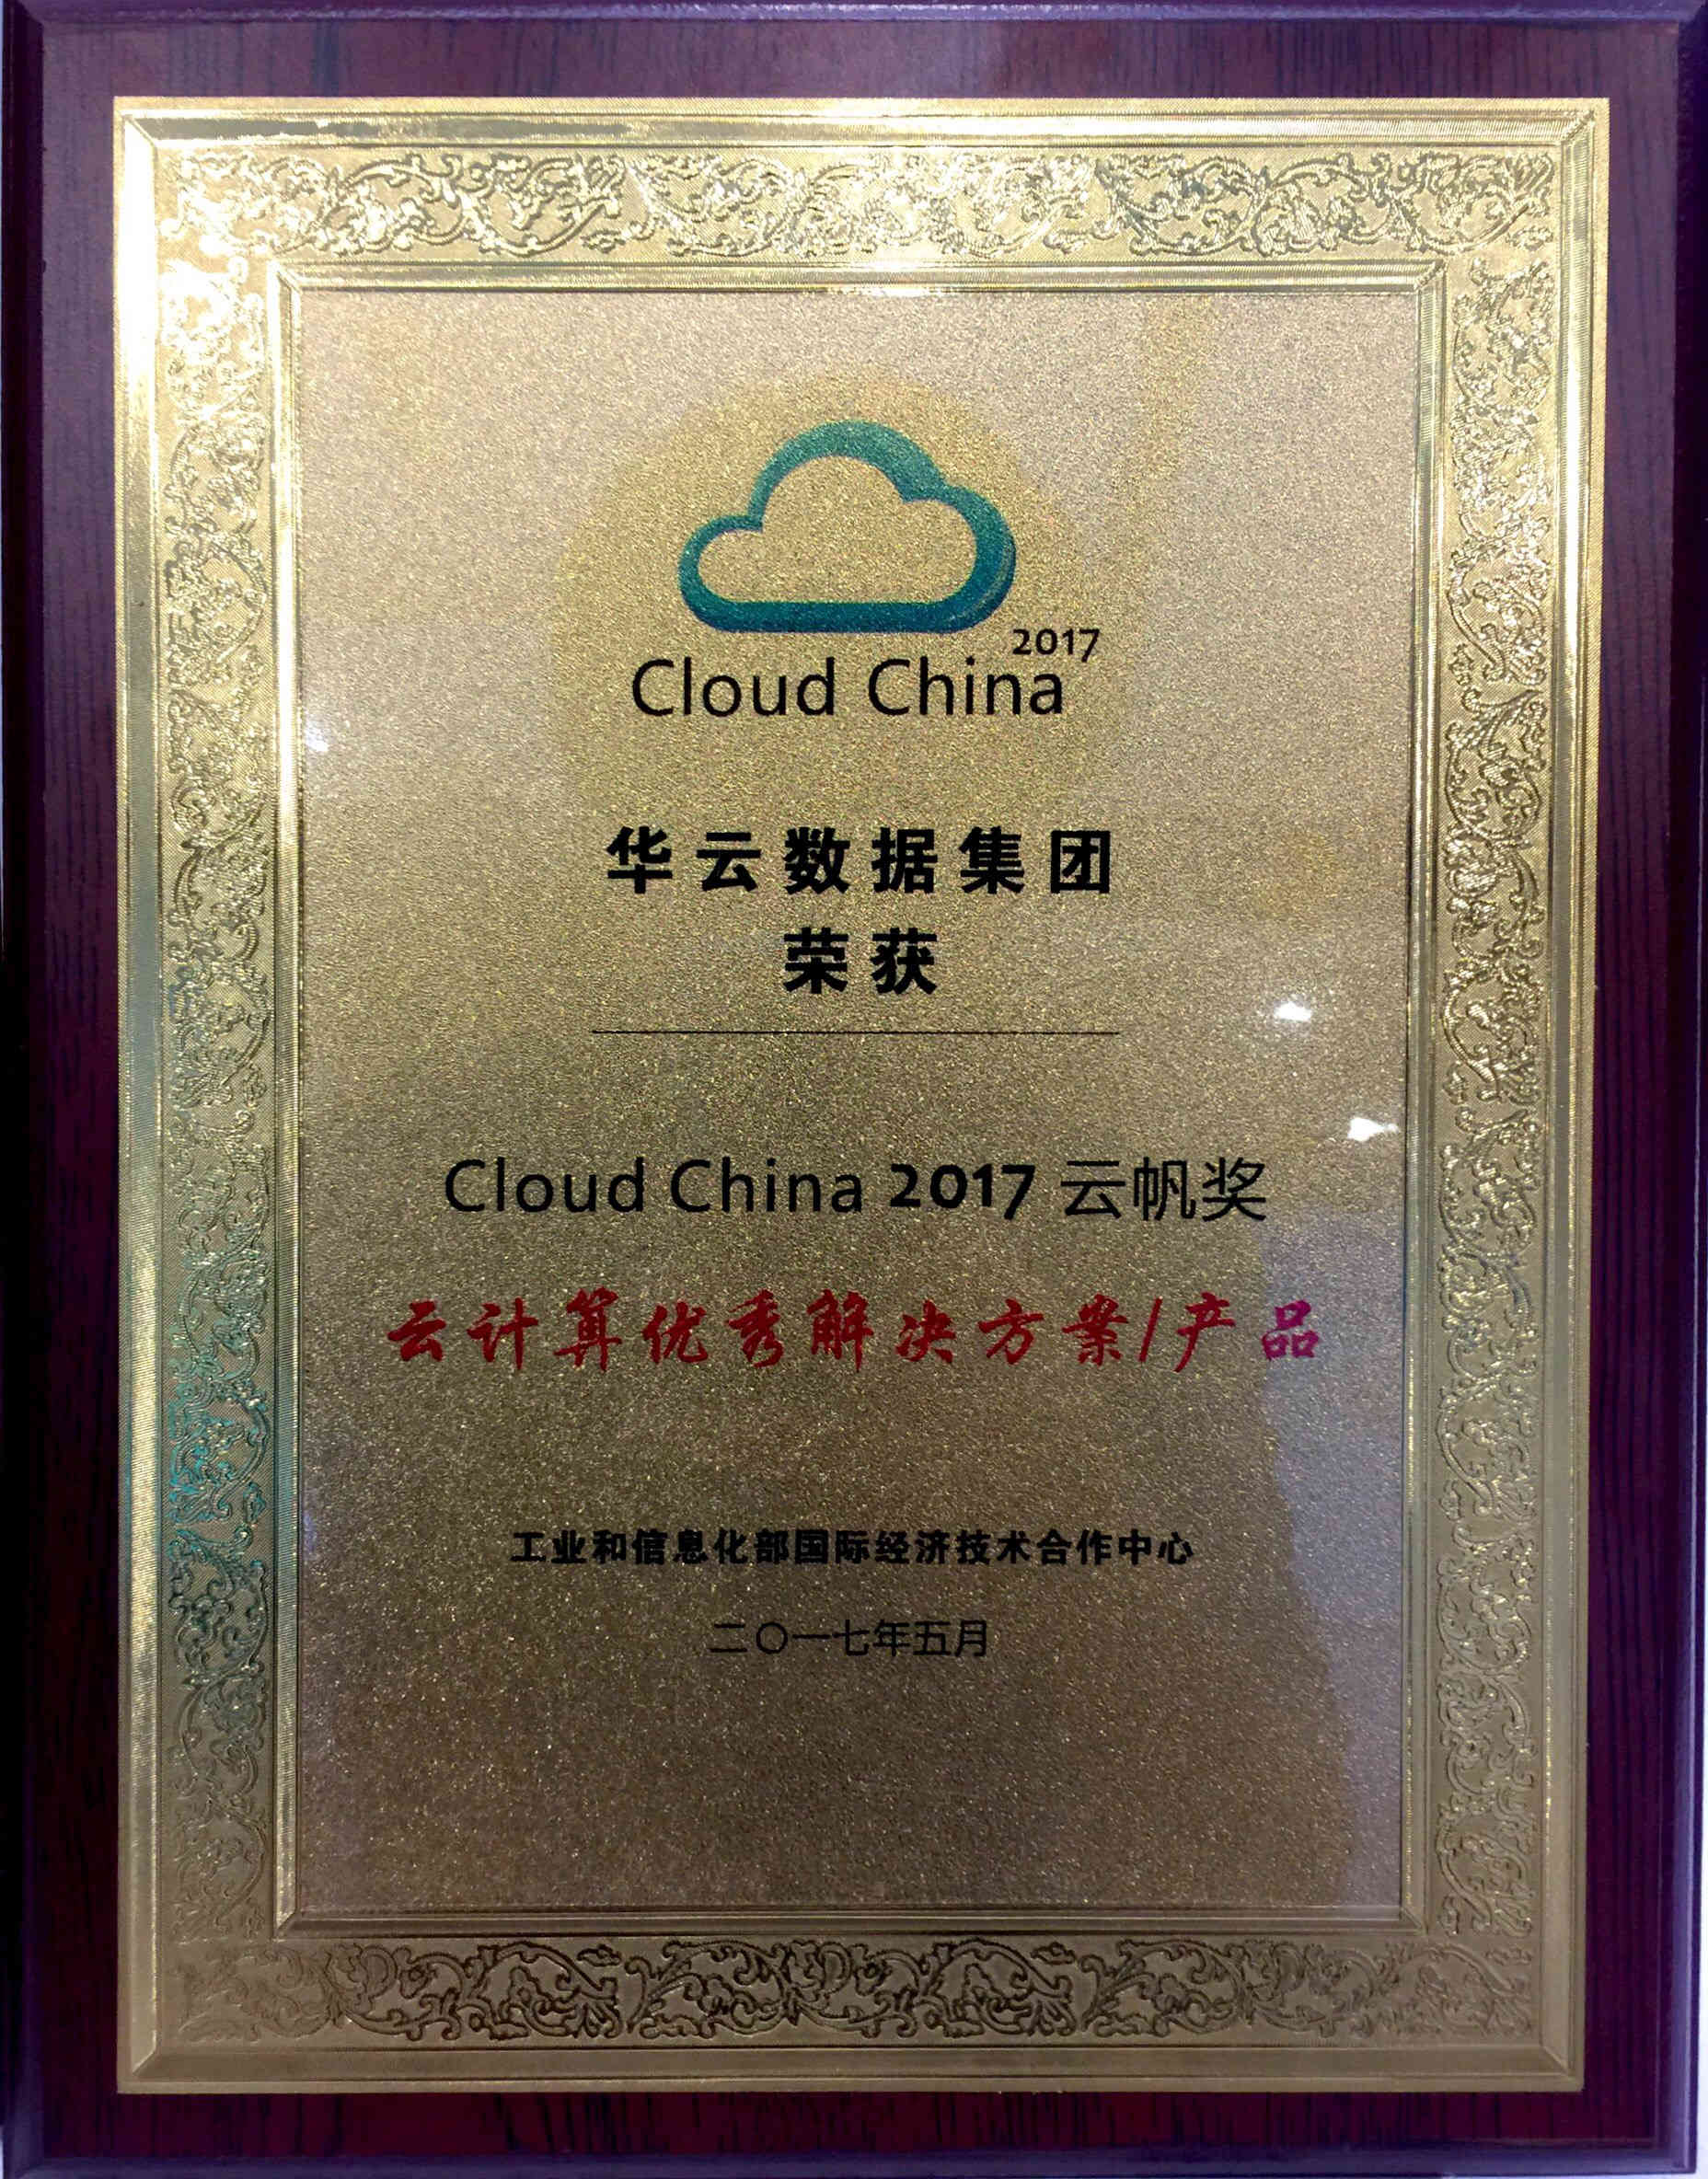 Cloud China 2017云帆奖 云计算优秀解决方案 产品